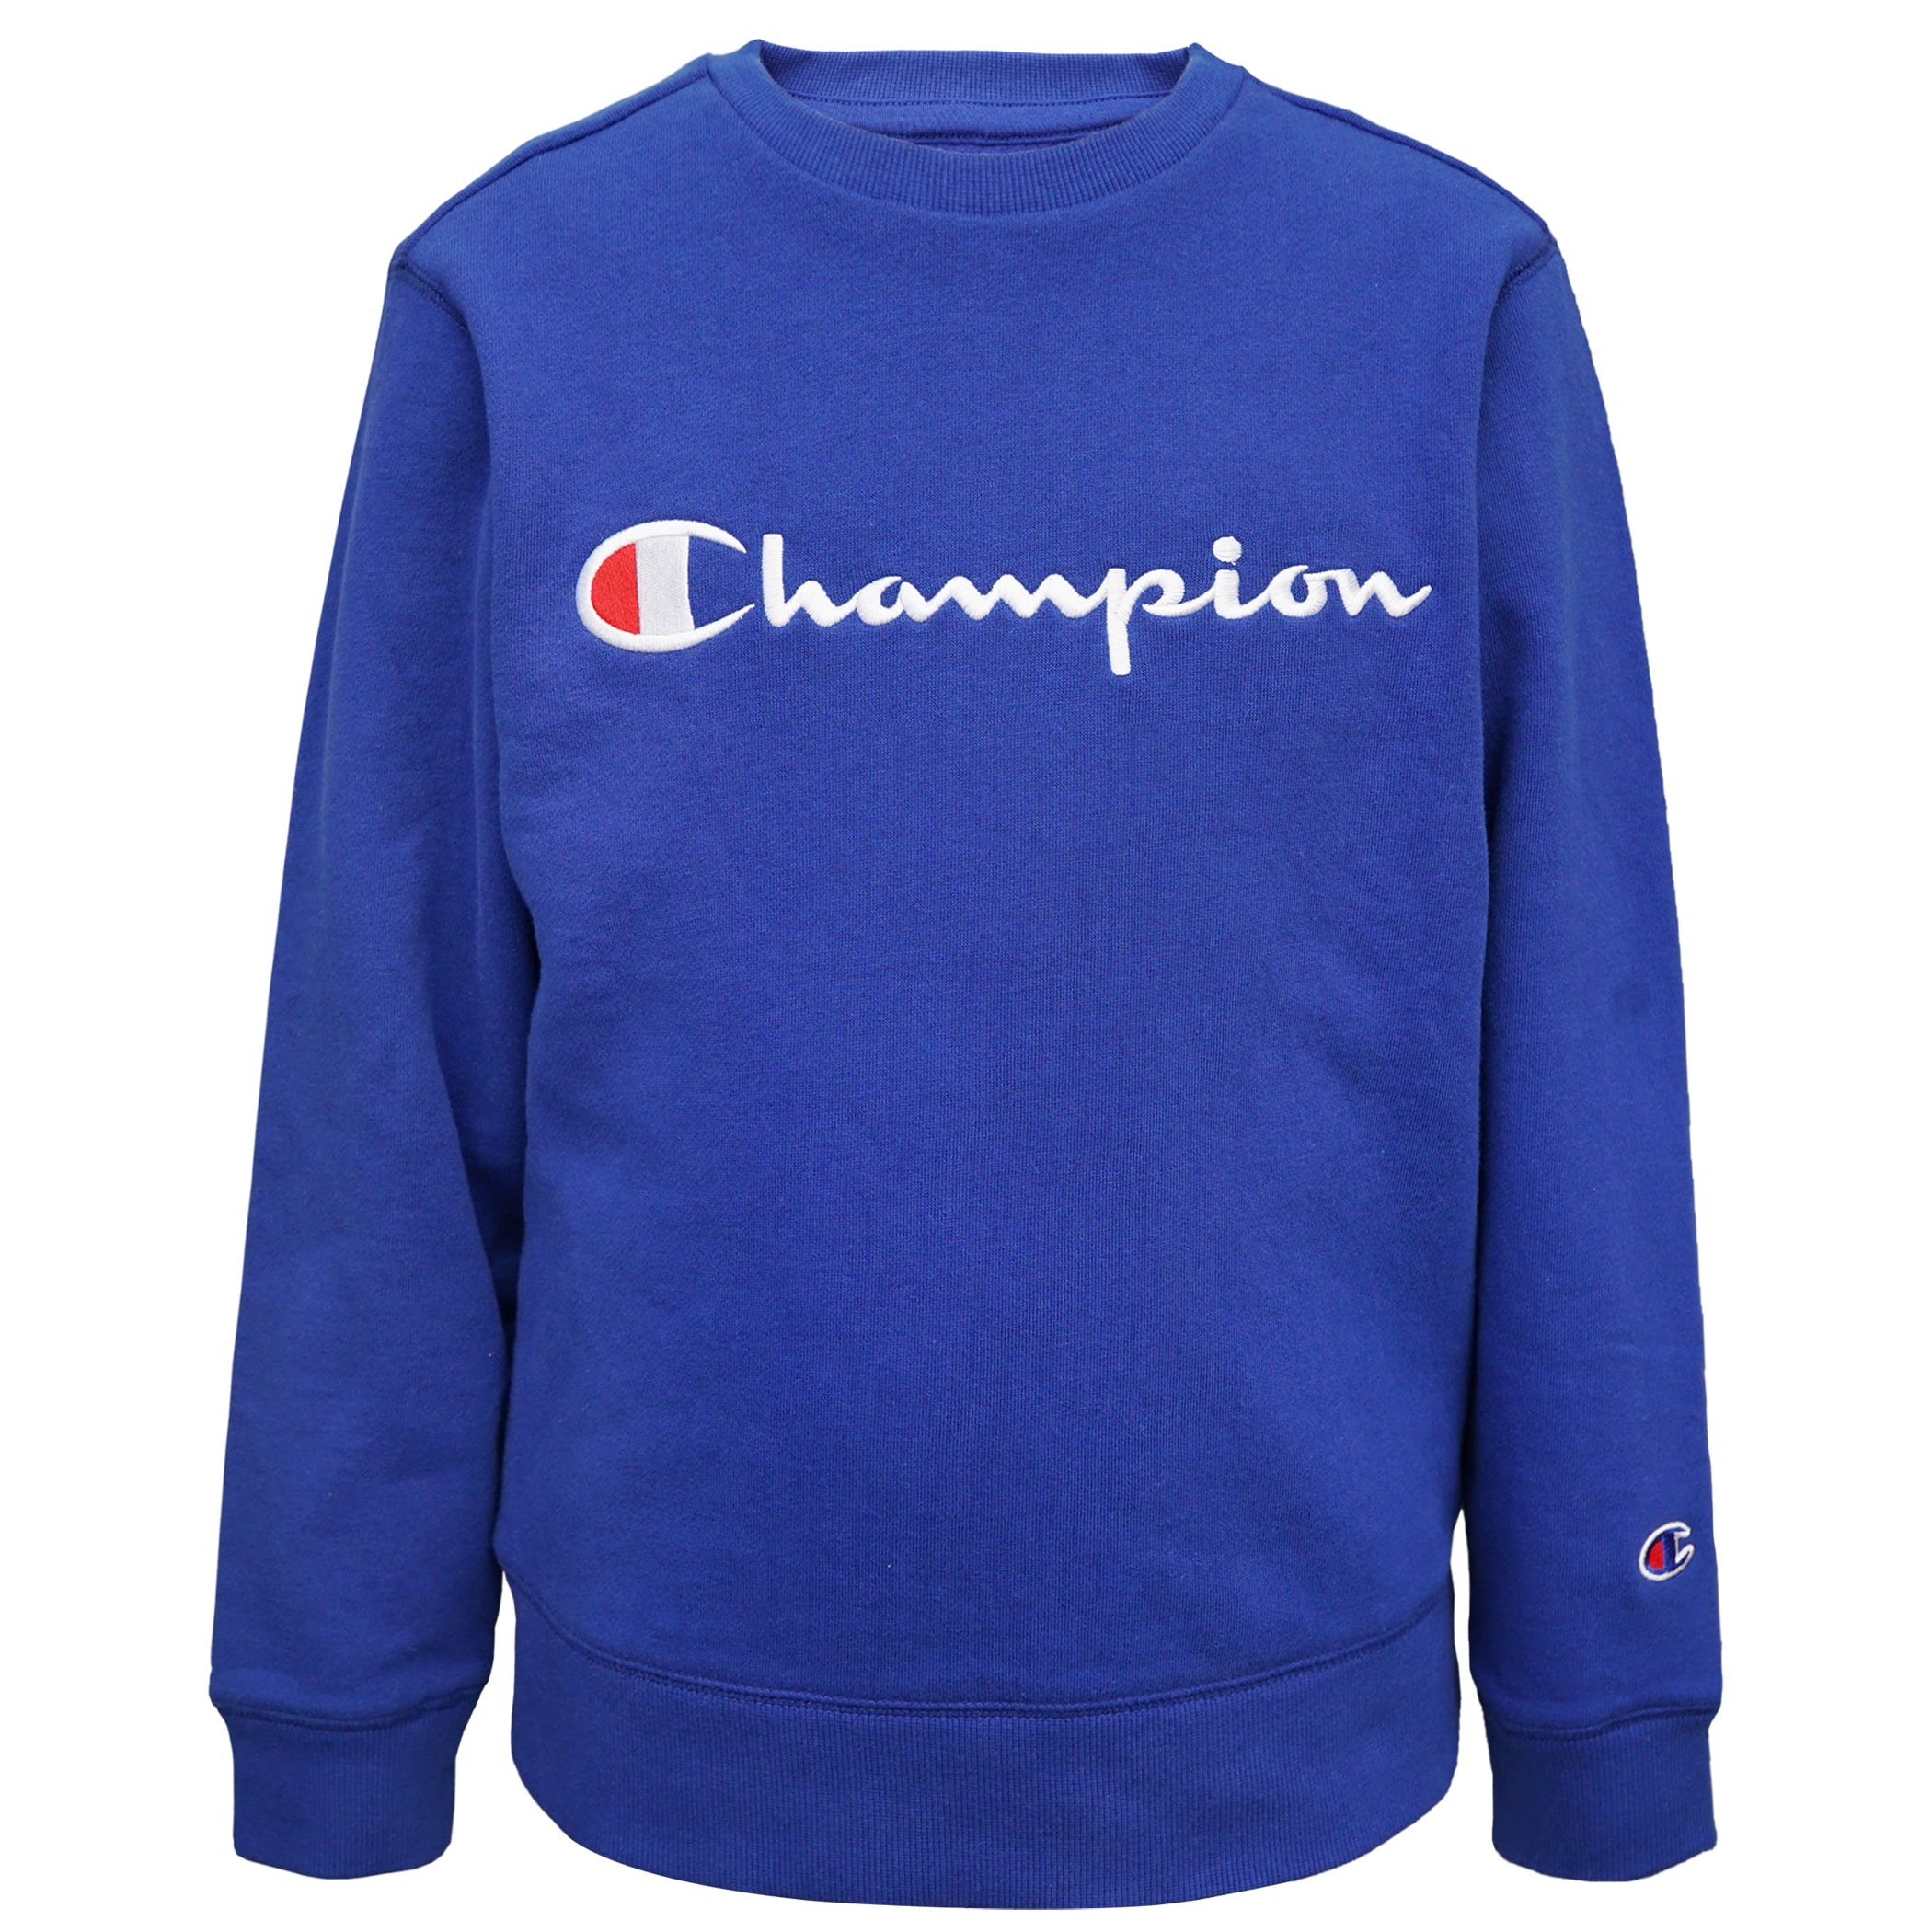 champion clothes walmart